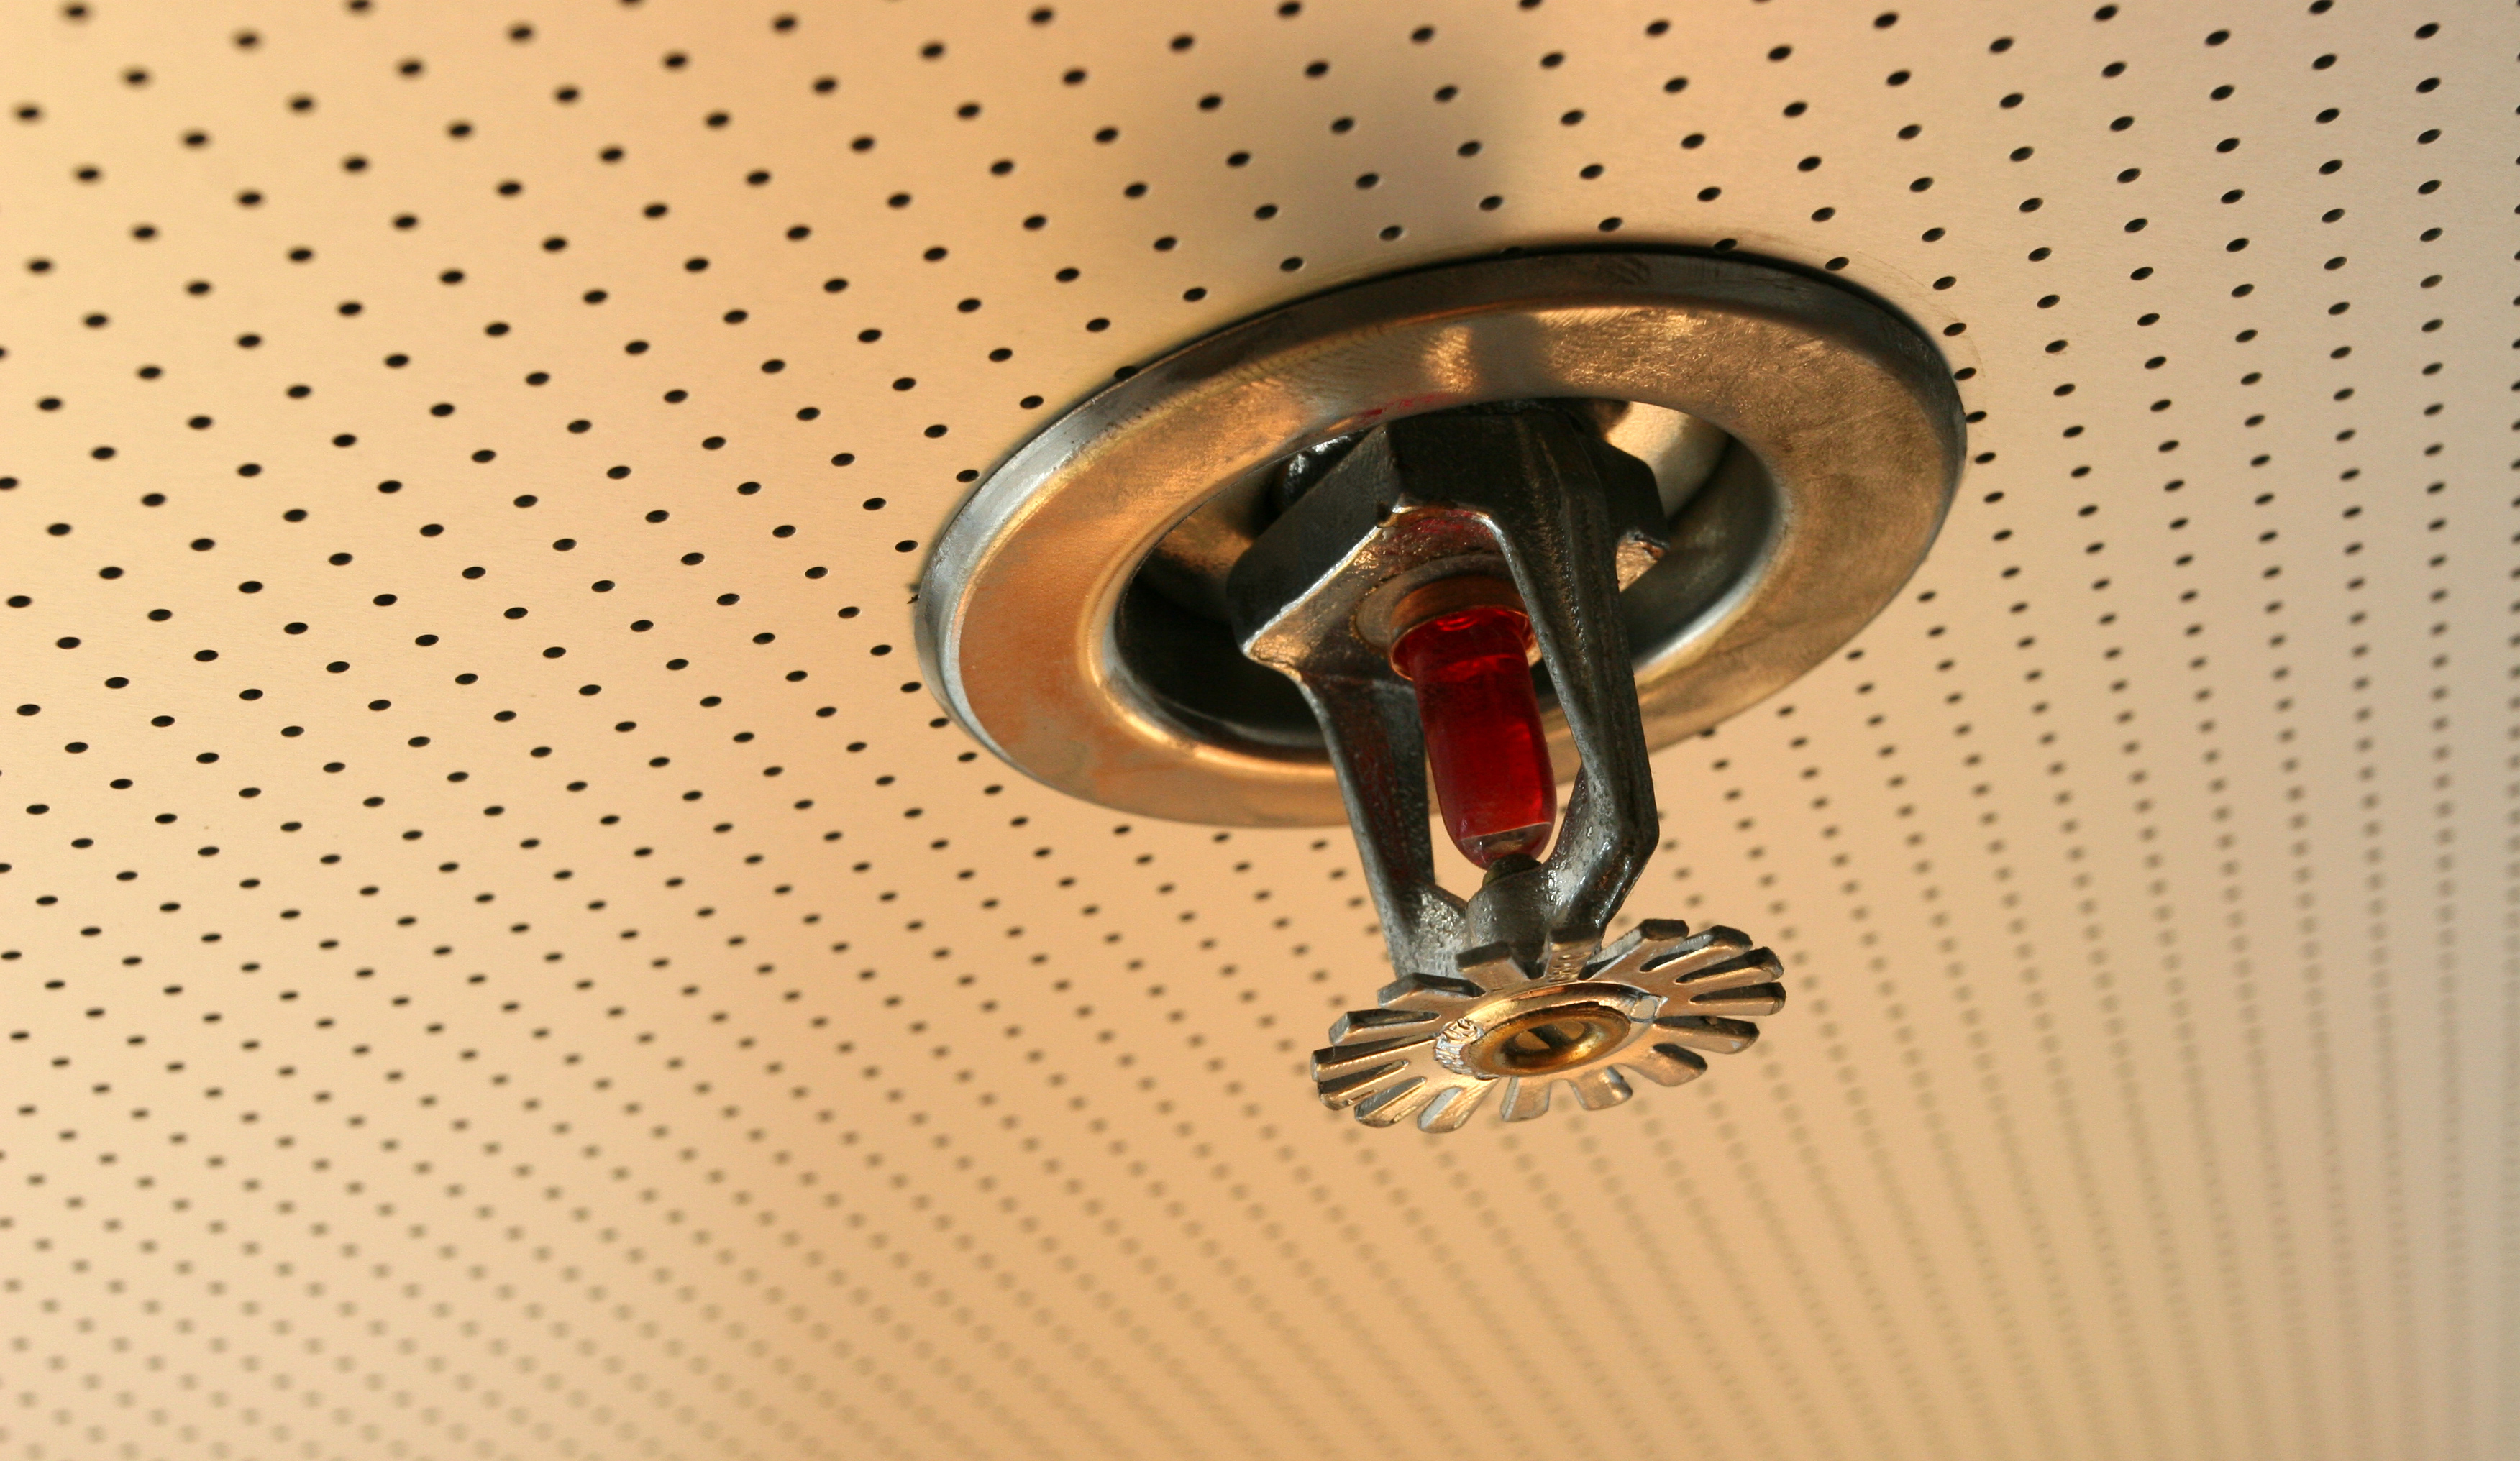 Ceiling sprinkler for fire protection